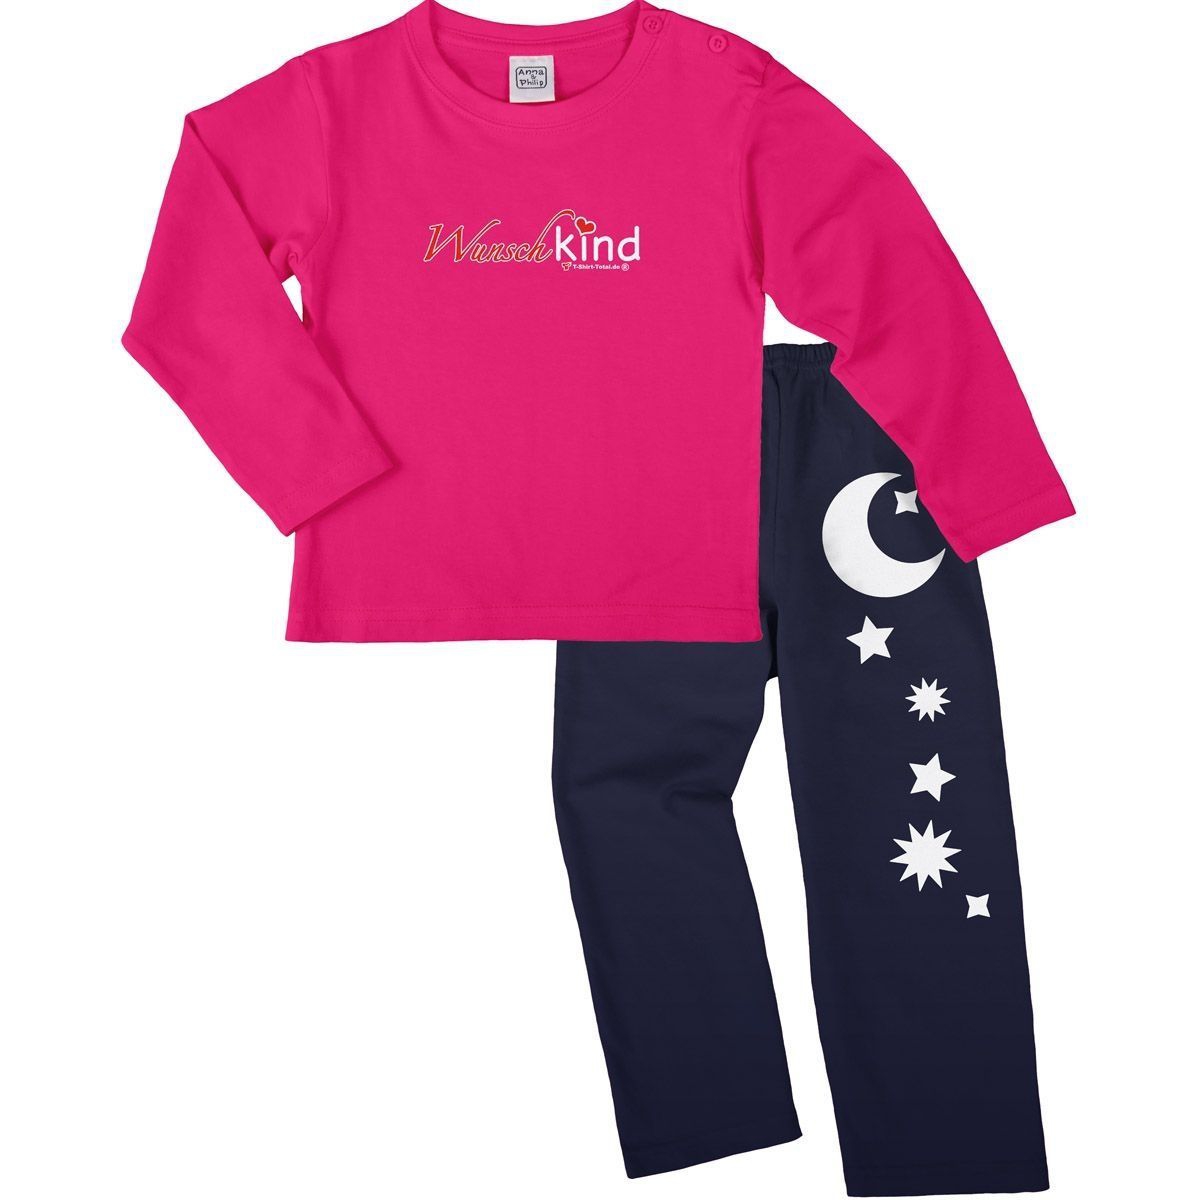 Wunschkind Pyjama Set pink / navy 80 / 86